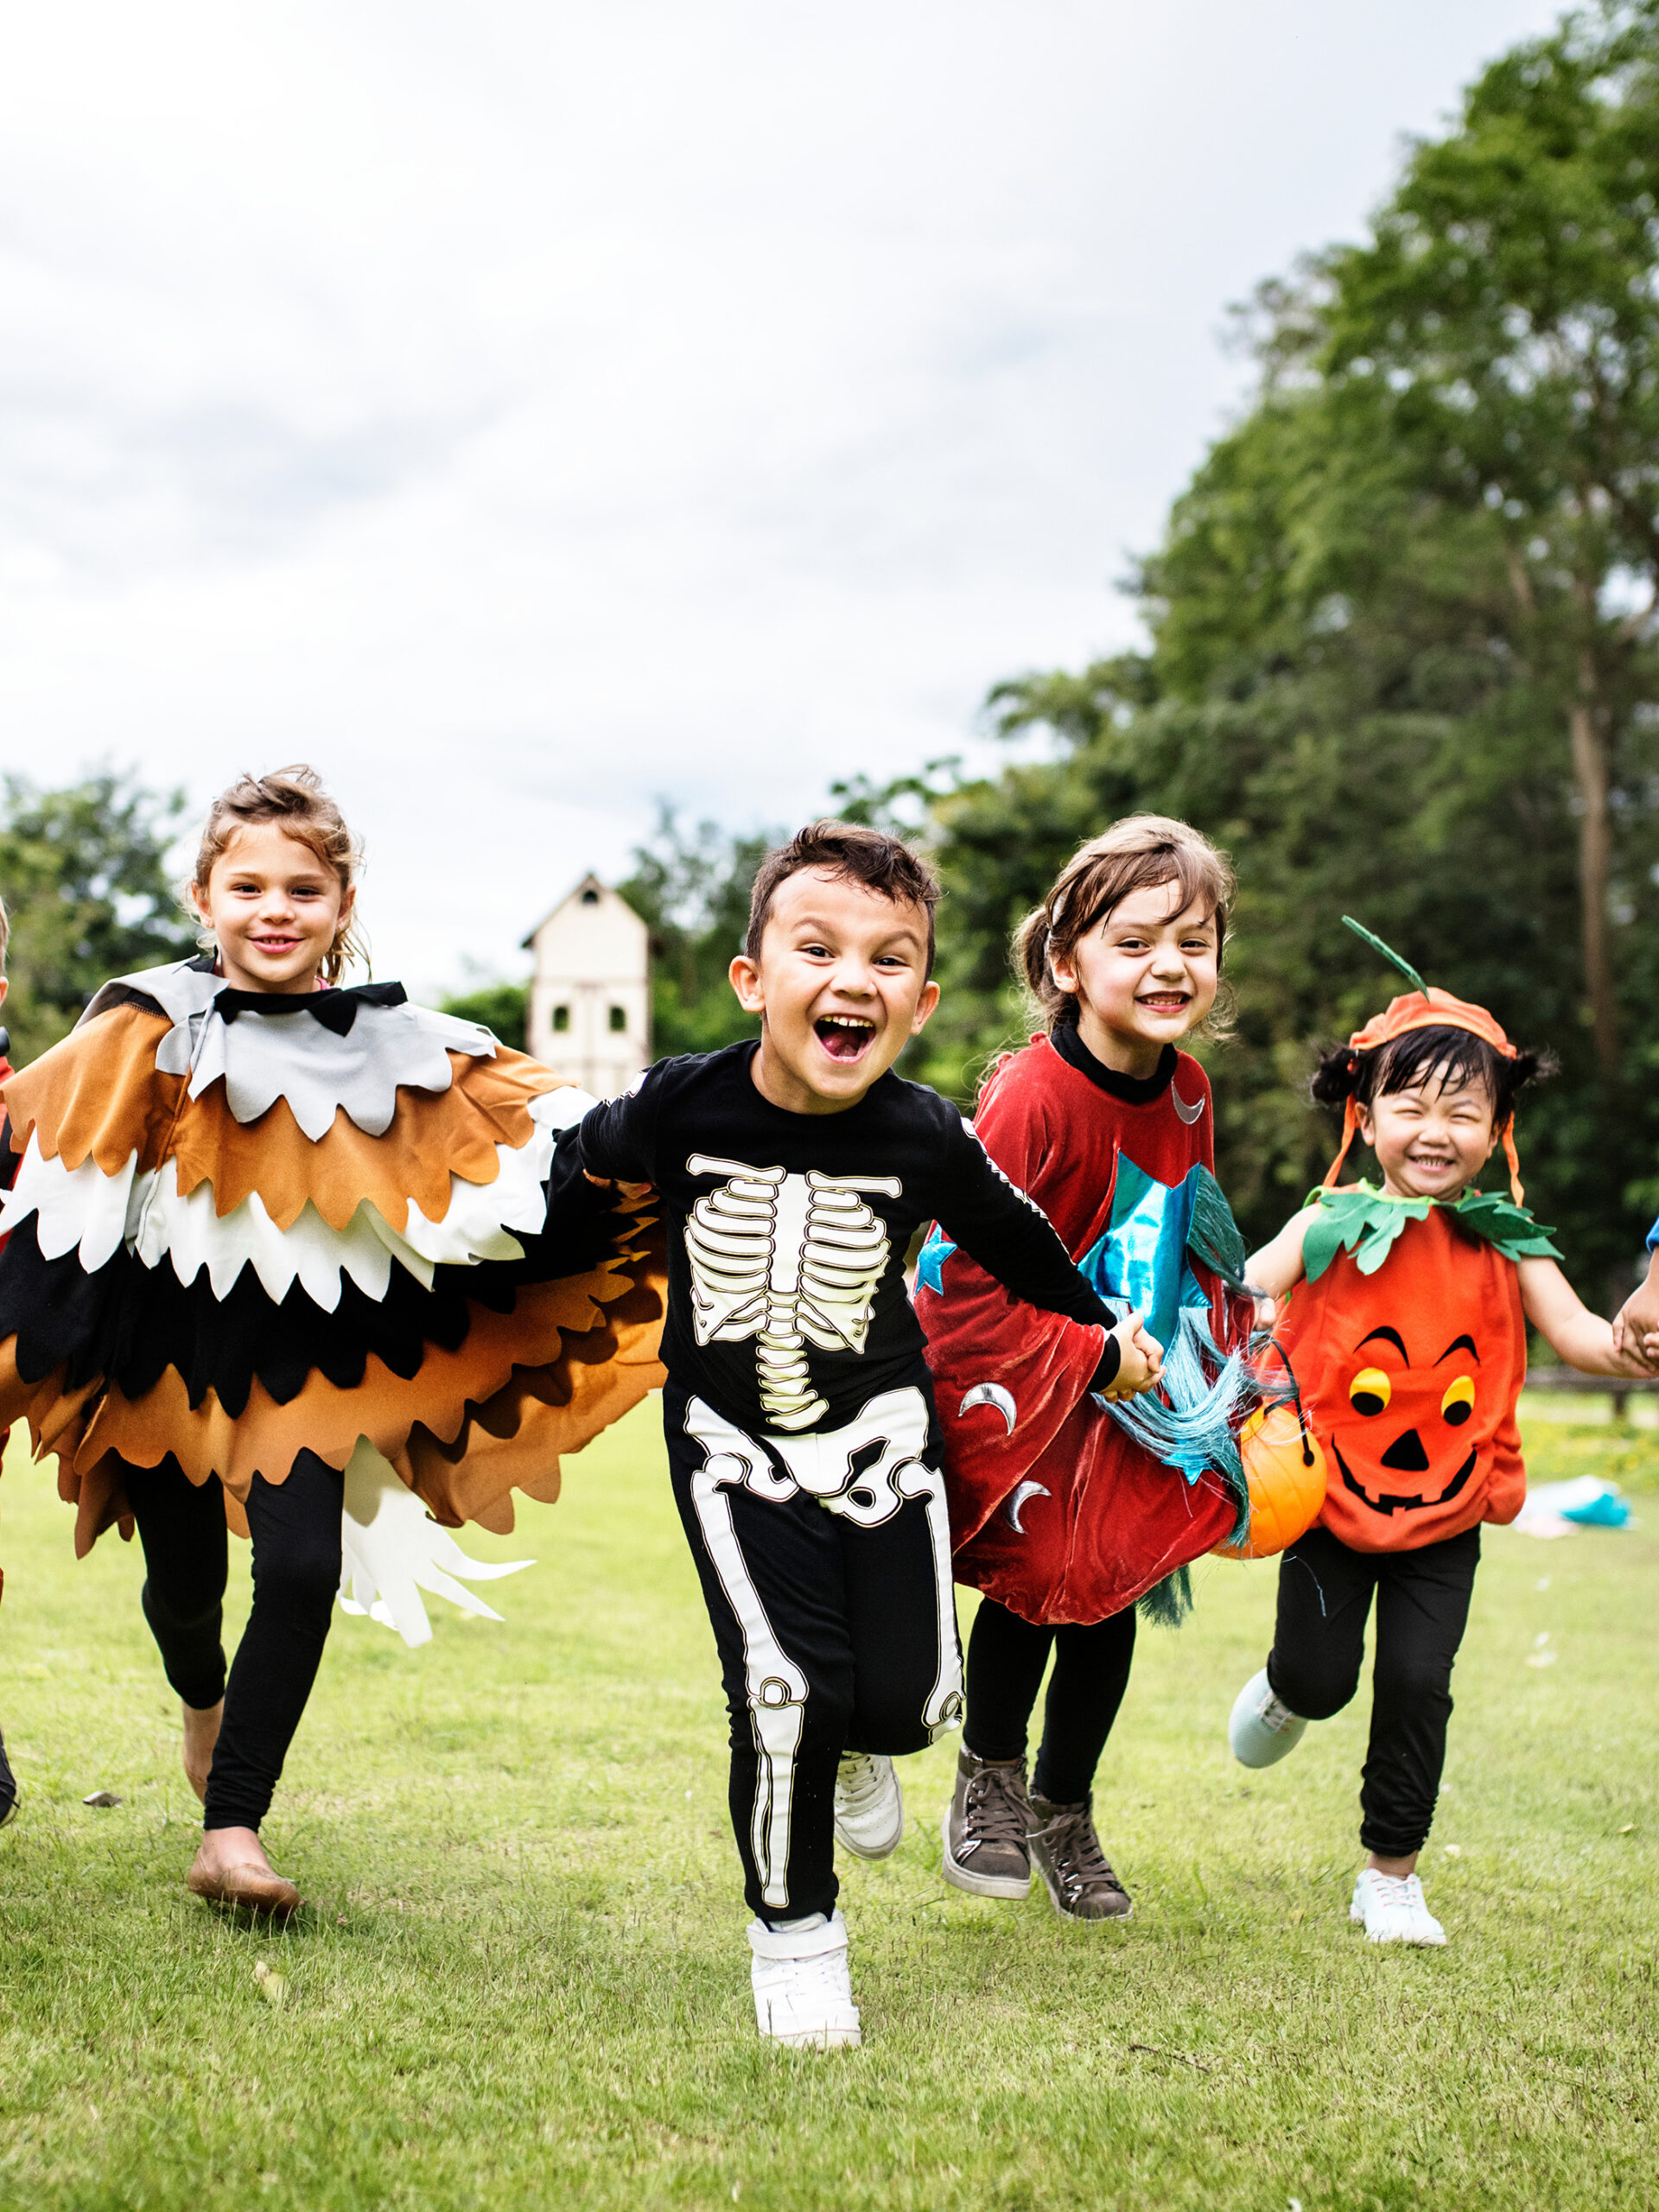 Kids wearing Halloween costumes run toward the camera